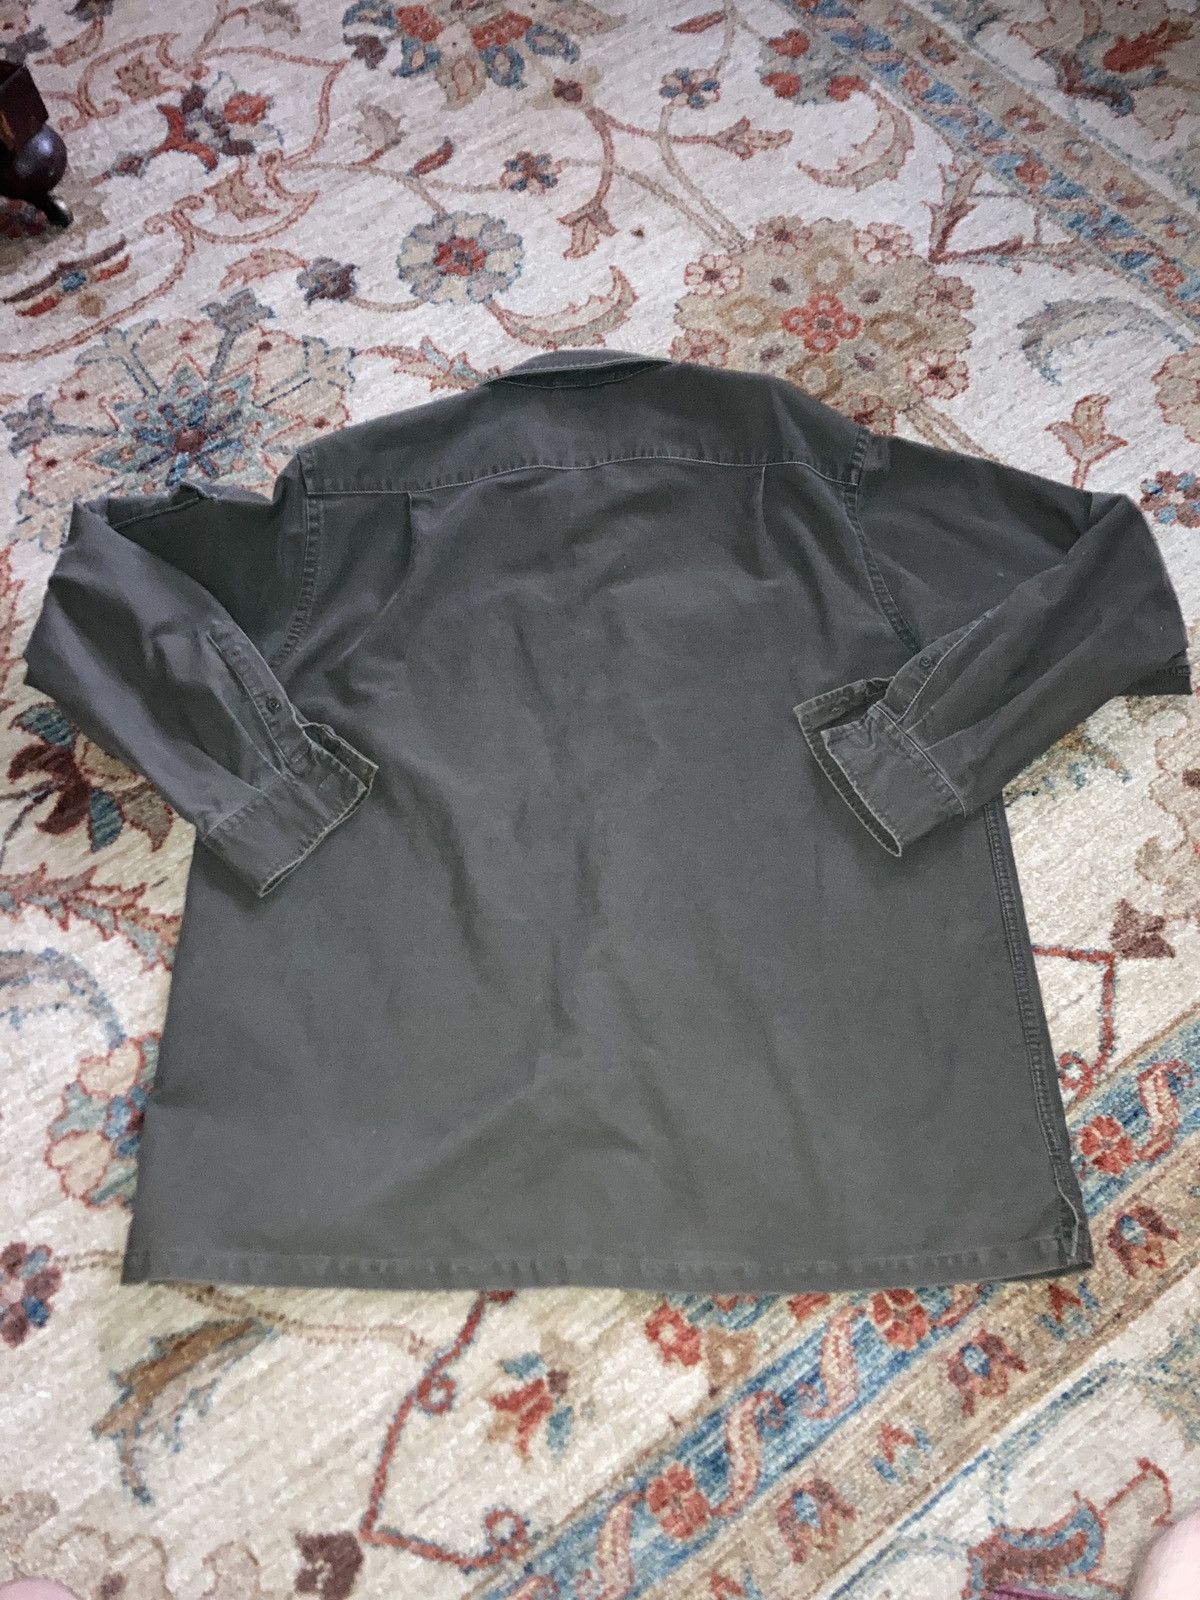 Vintage VTG GAP Military Army Olive Heavy Button Shirt Large Size US XL / EU 56 / 4 - 6 Thumbnail